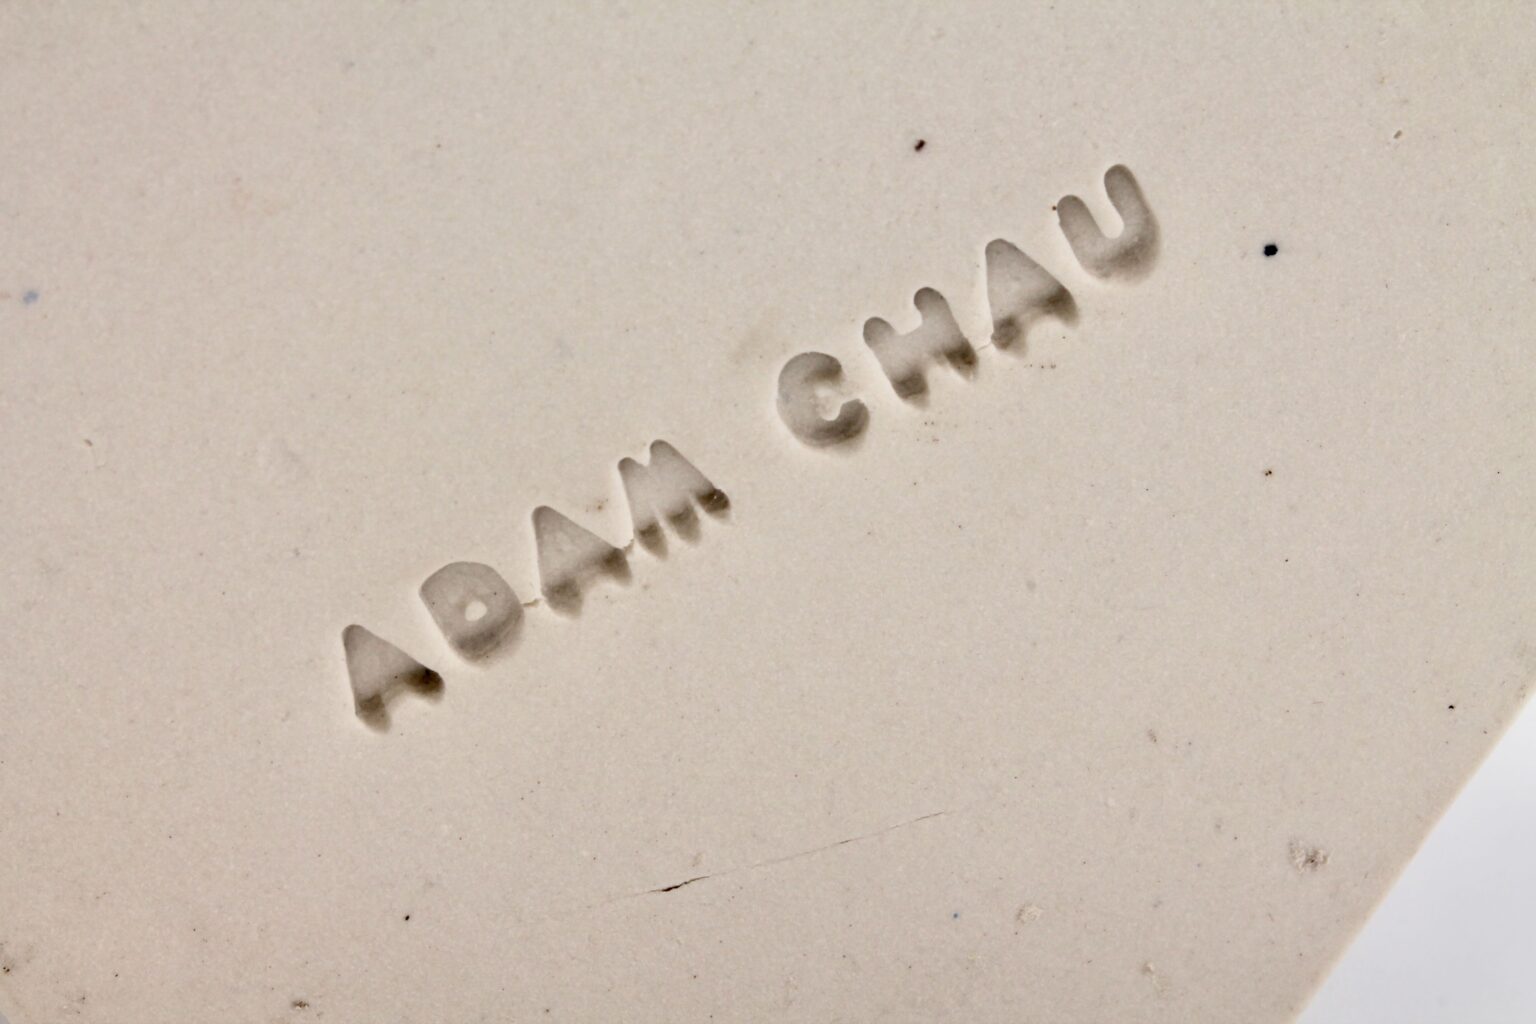 Made by Adam Chau